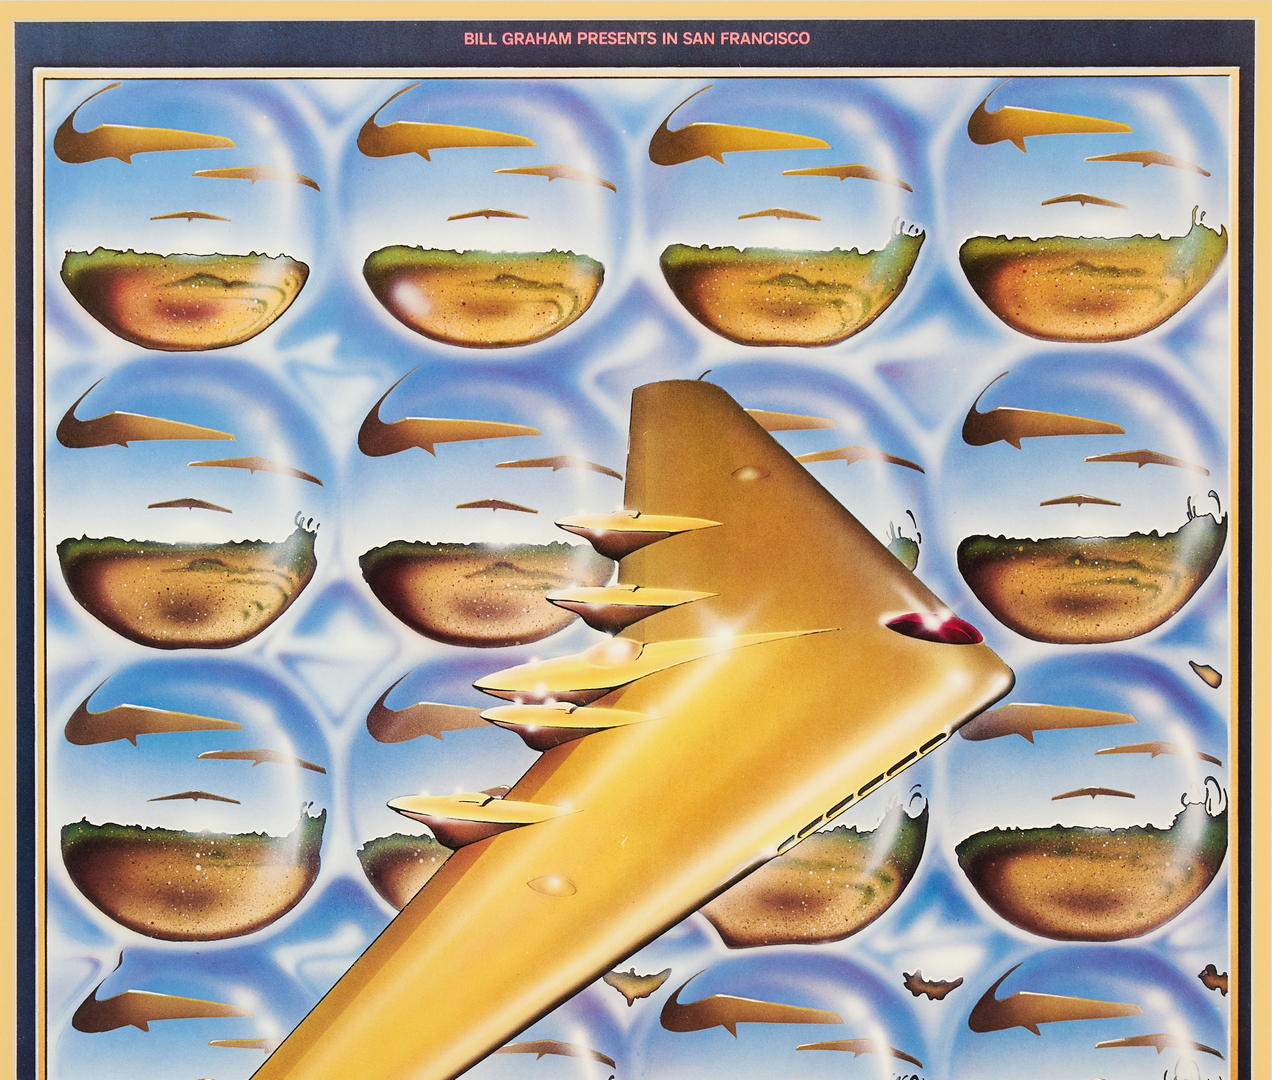 Lot 505: 3 Rock Posters: Santana, The Band, McCartney & Wings